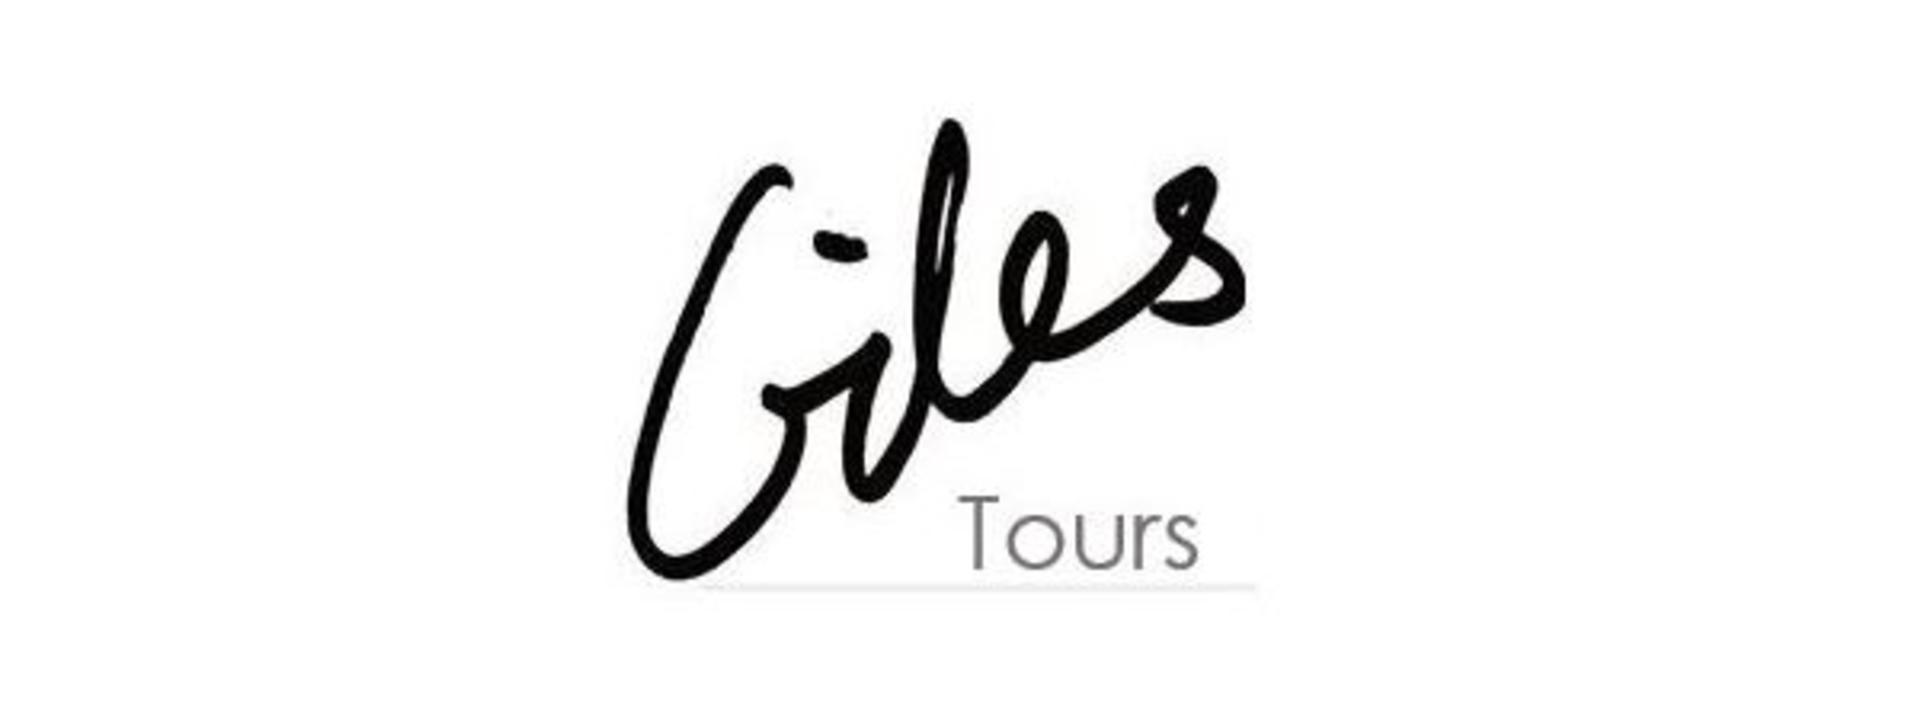 giles-tours-logo-4.jpg